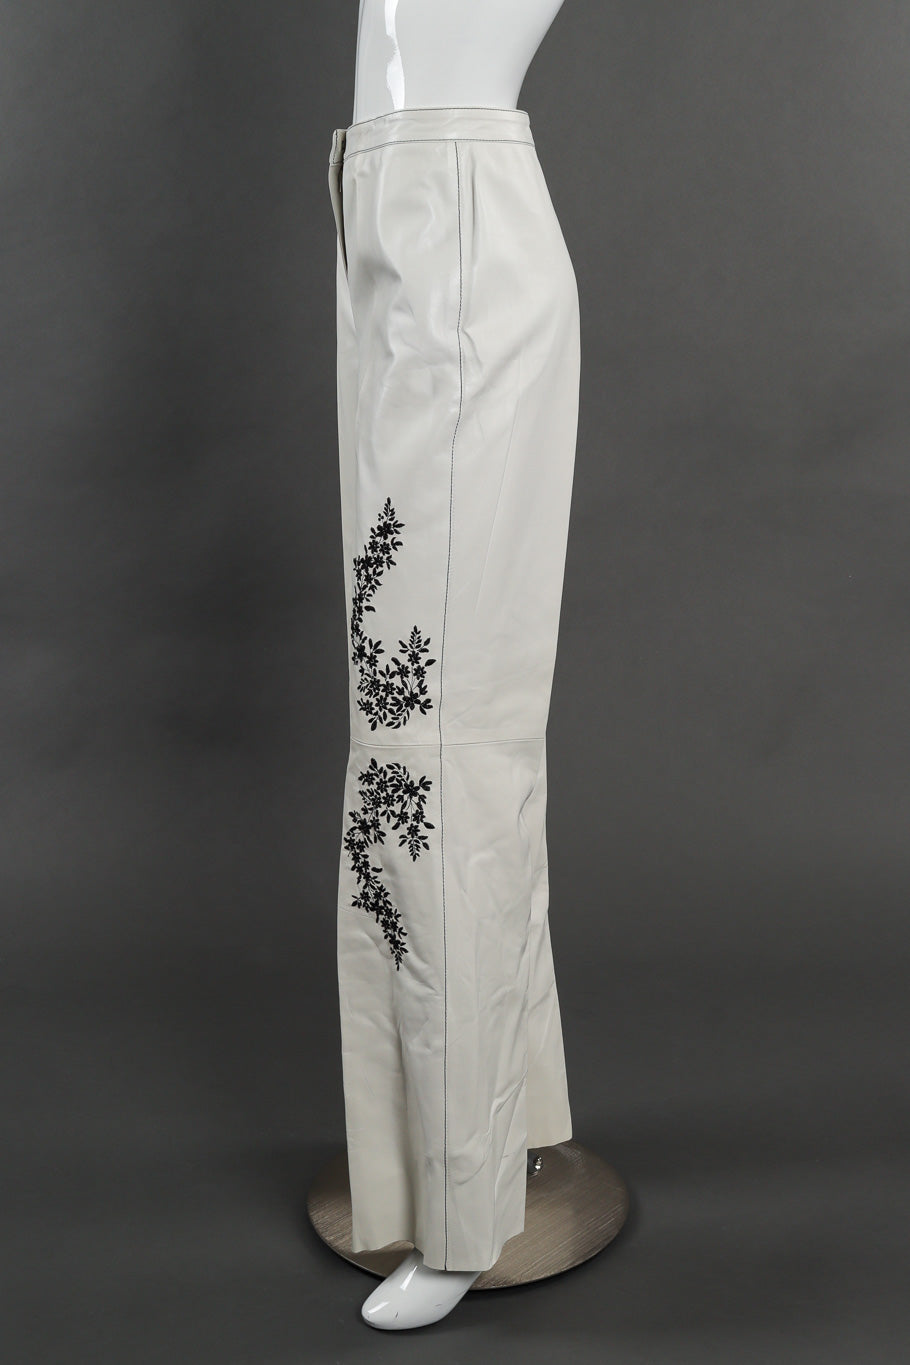 Vintage Estrella G Embroidered Leather Vest and Pant Set side view of pant on mannequin @Recessla